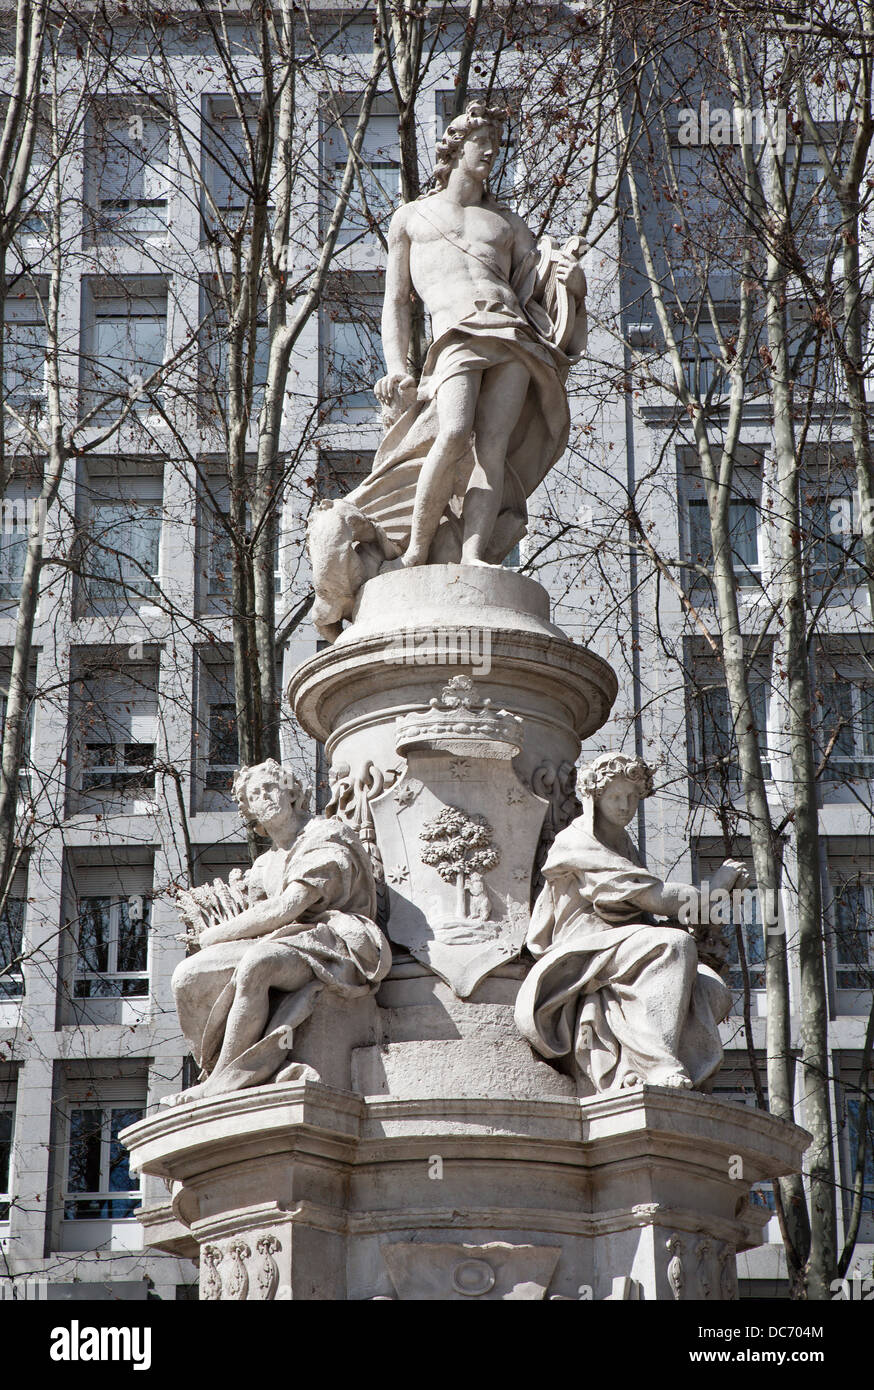 Madrid - Brunnen von Apollo (Fuente de Apolo) von Paseo del Prado Straße. Stockfoto